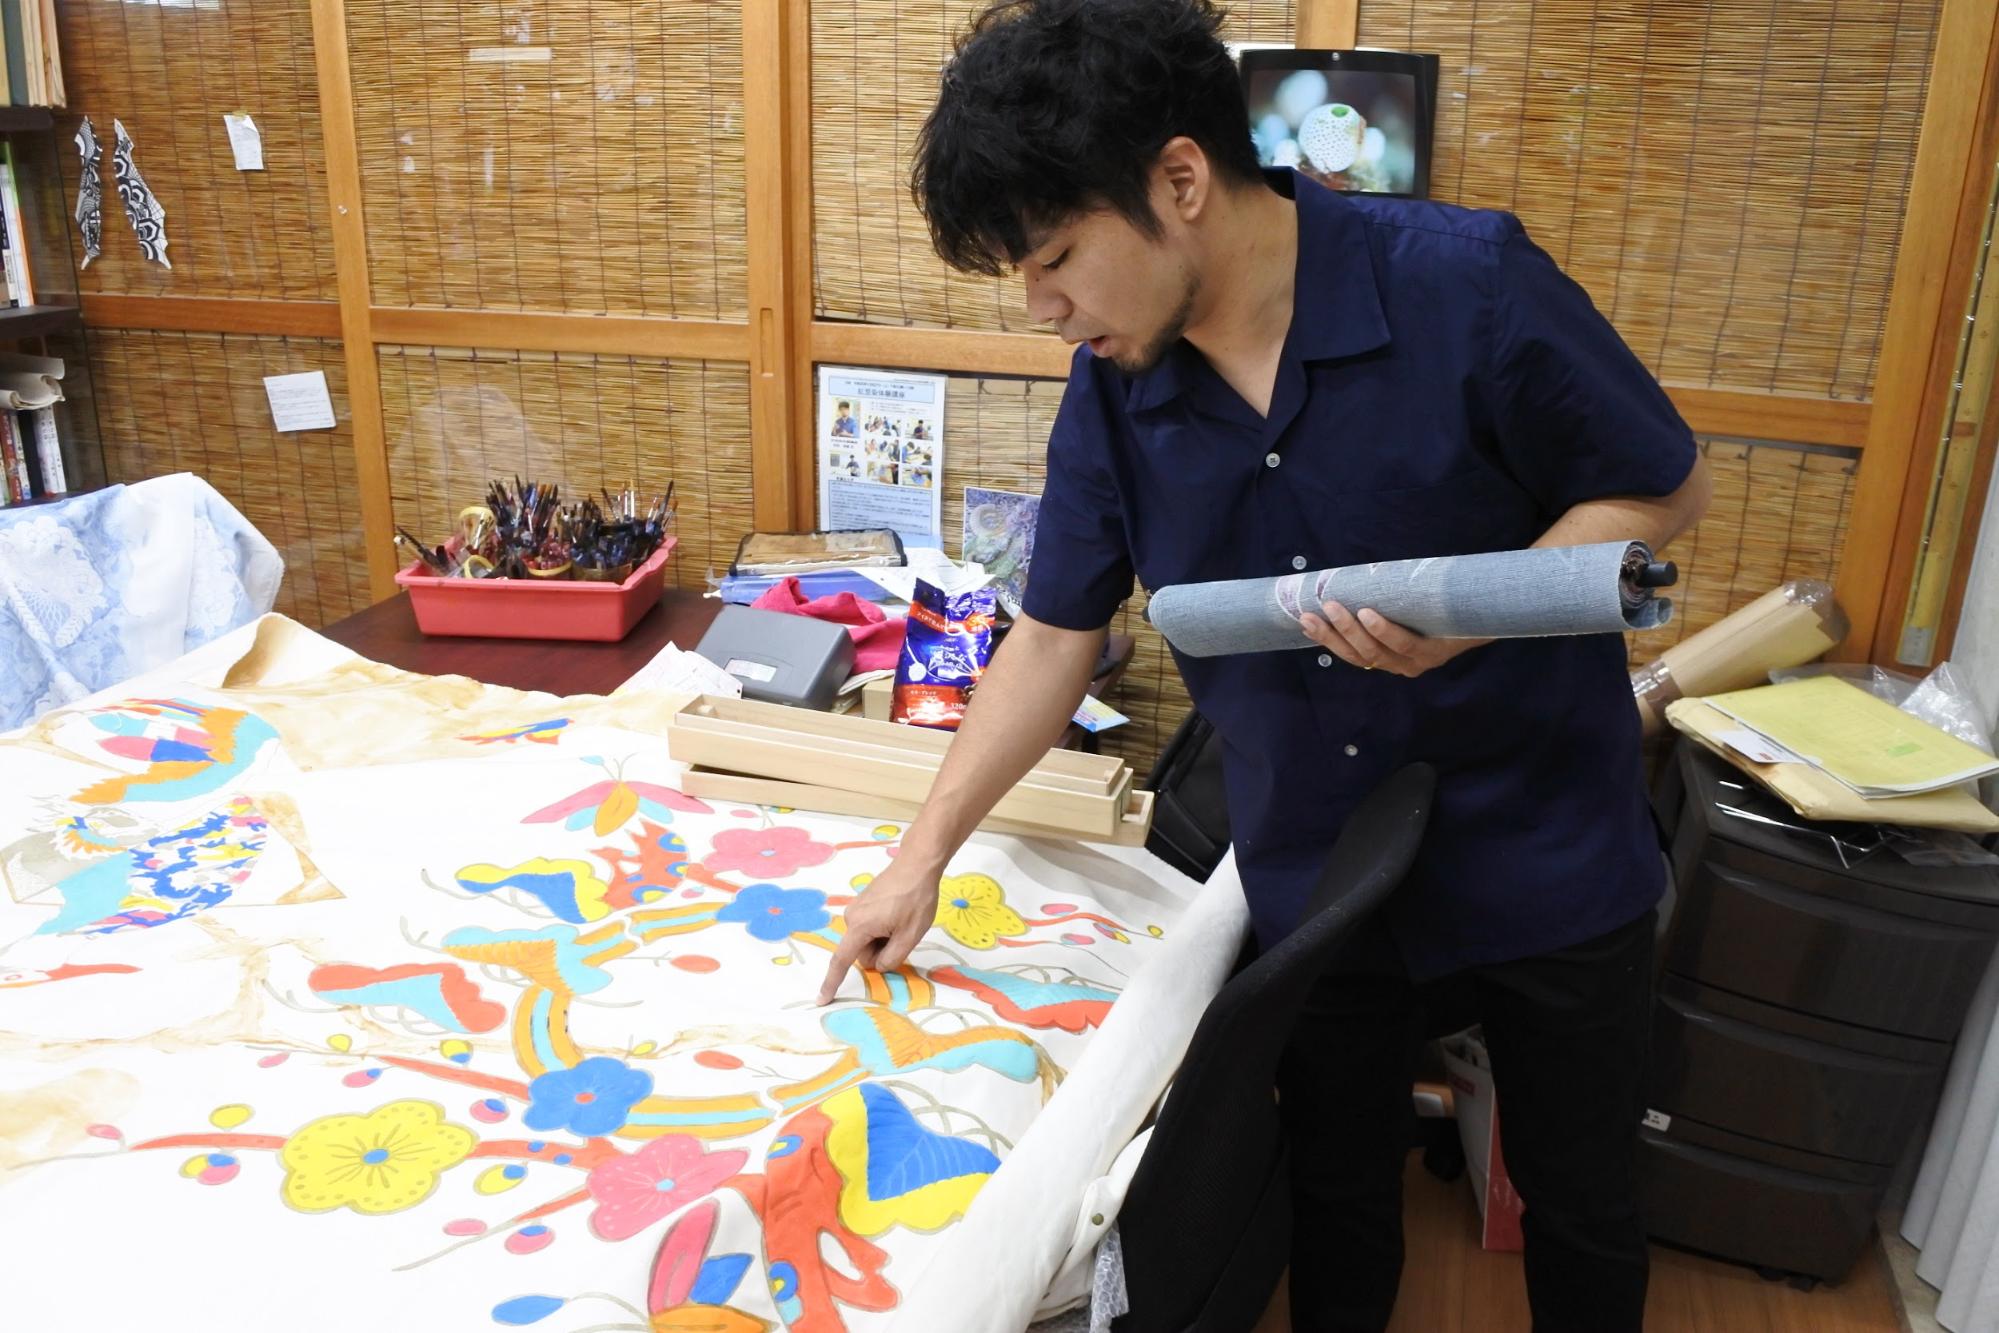 Yukinaga explains about collaboration of "Bingata" work with DENPA | Photo by Masaya Morita